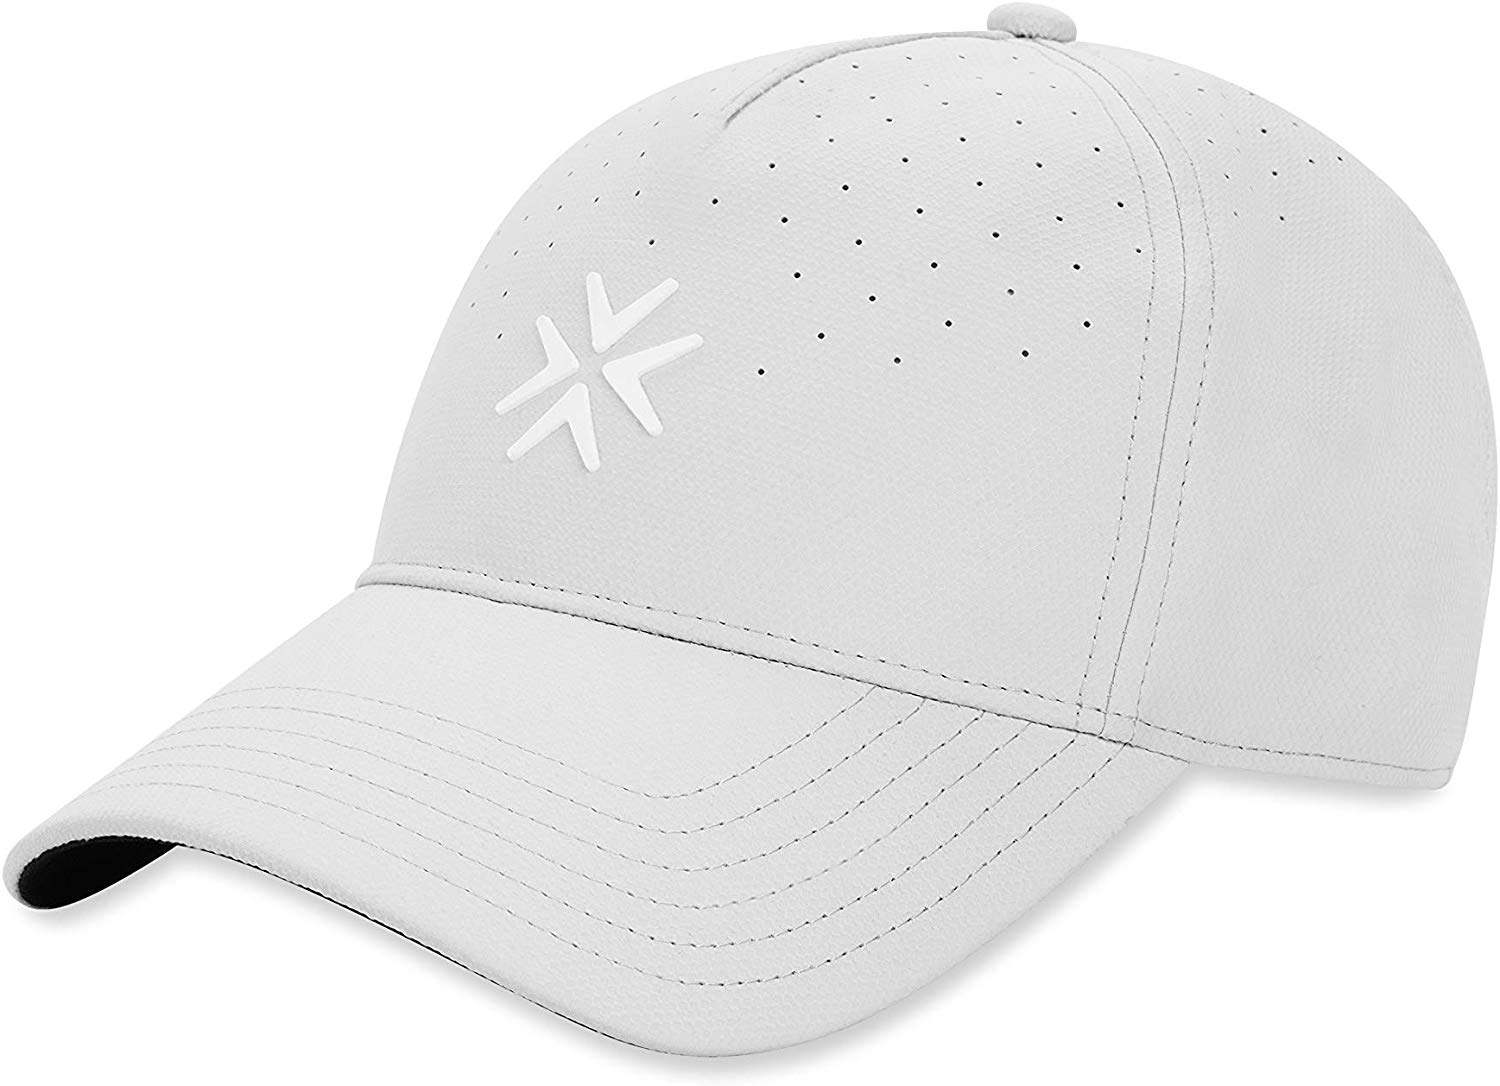 Callaway Womens 2019 Opti Vent Golf Hats